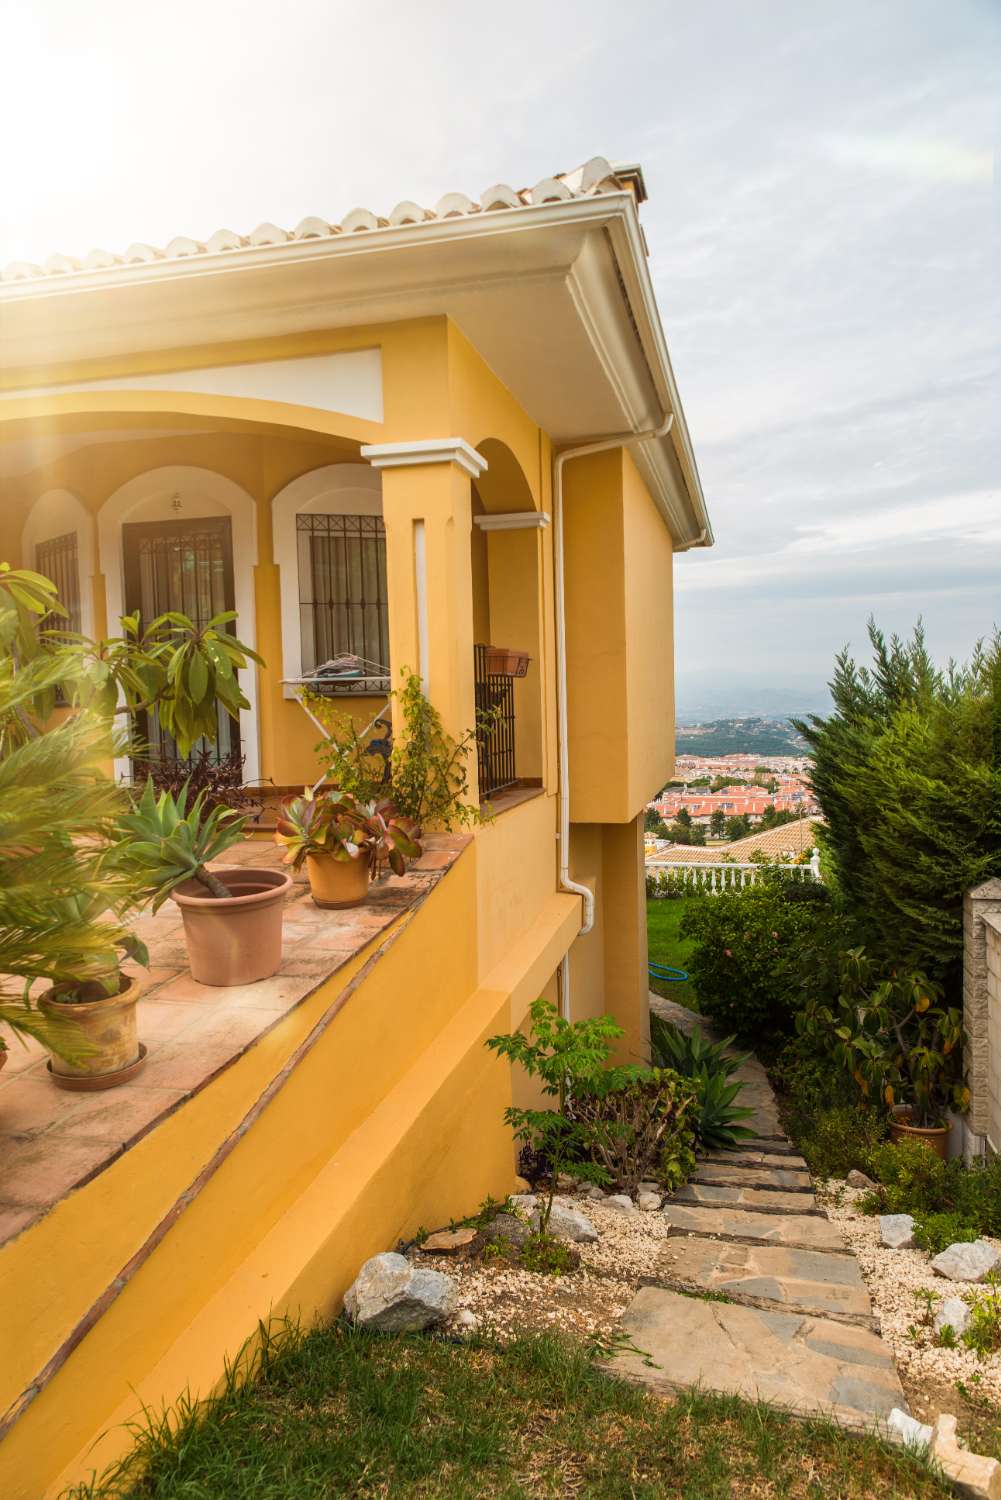 Excellent Villa with spectacular views in Alhaurin de la Torre